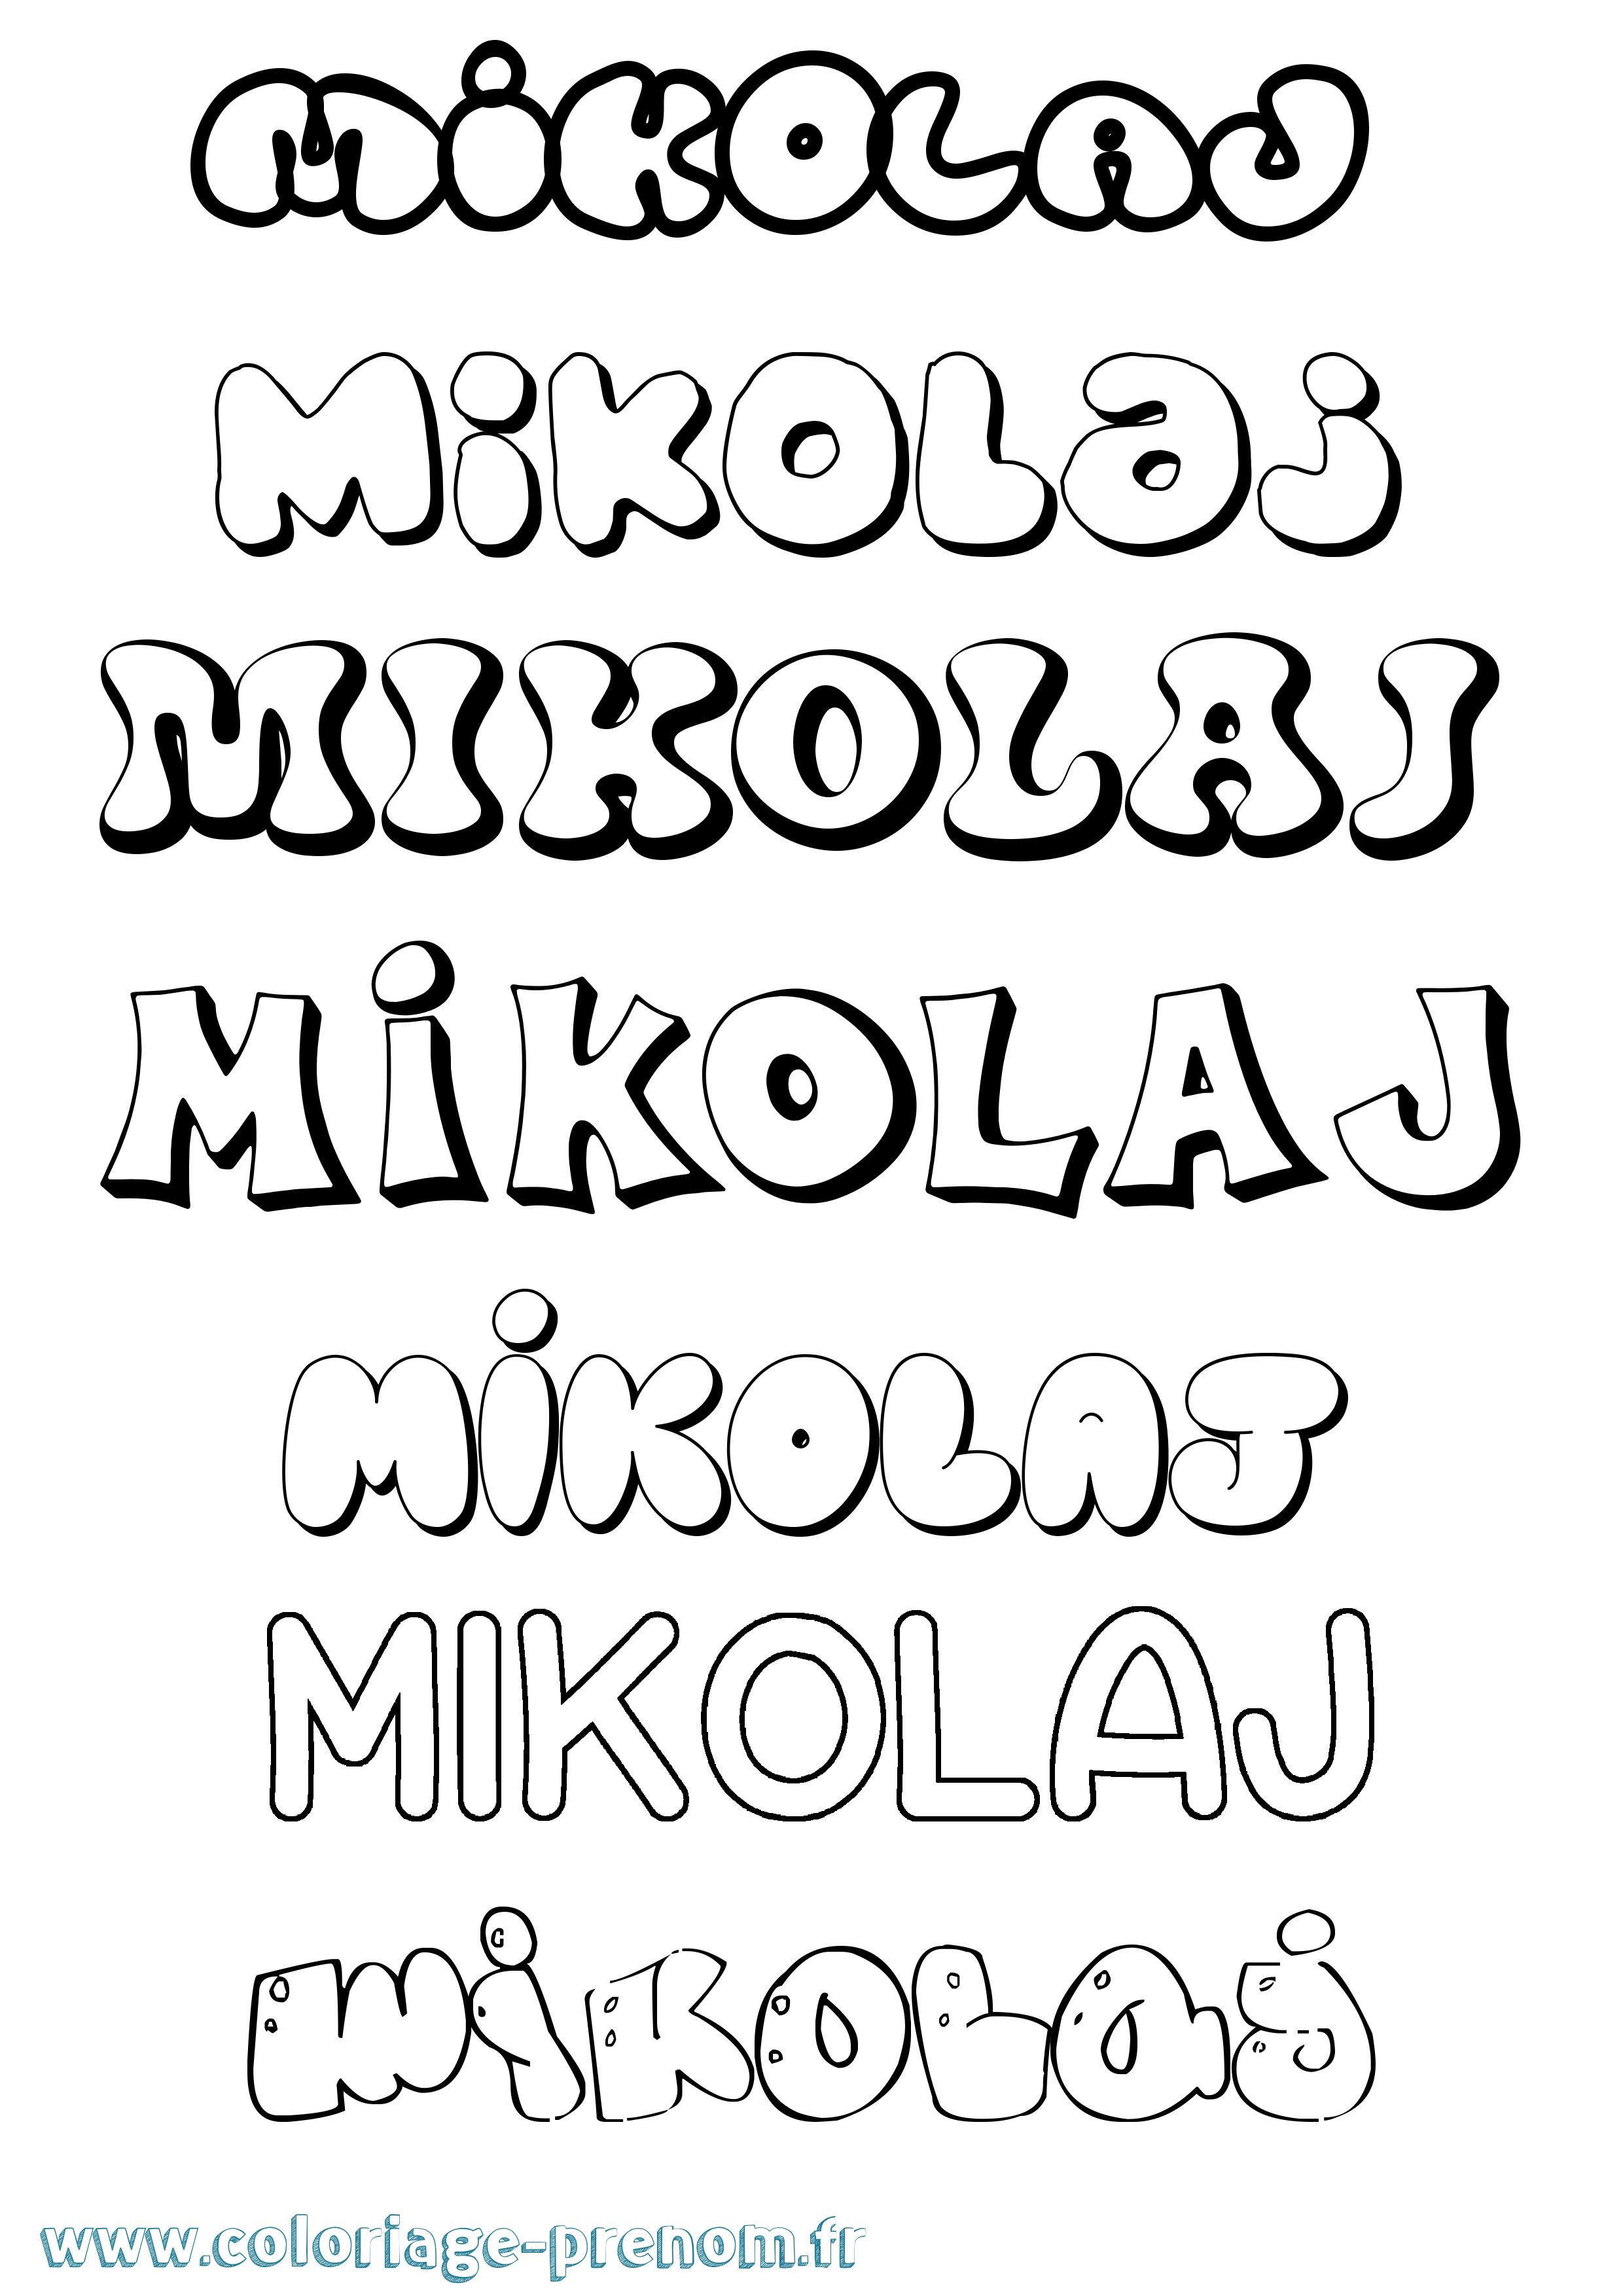 Coloriage prénom Mikolaj Bubble